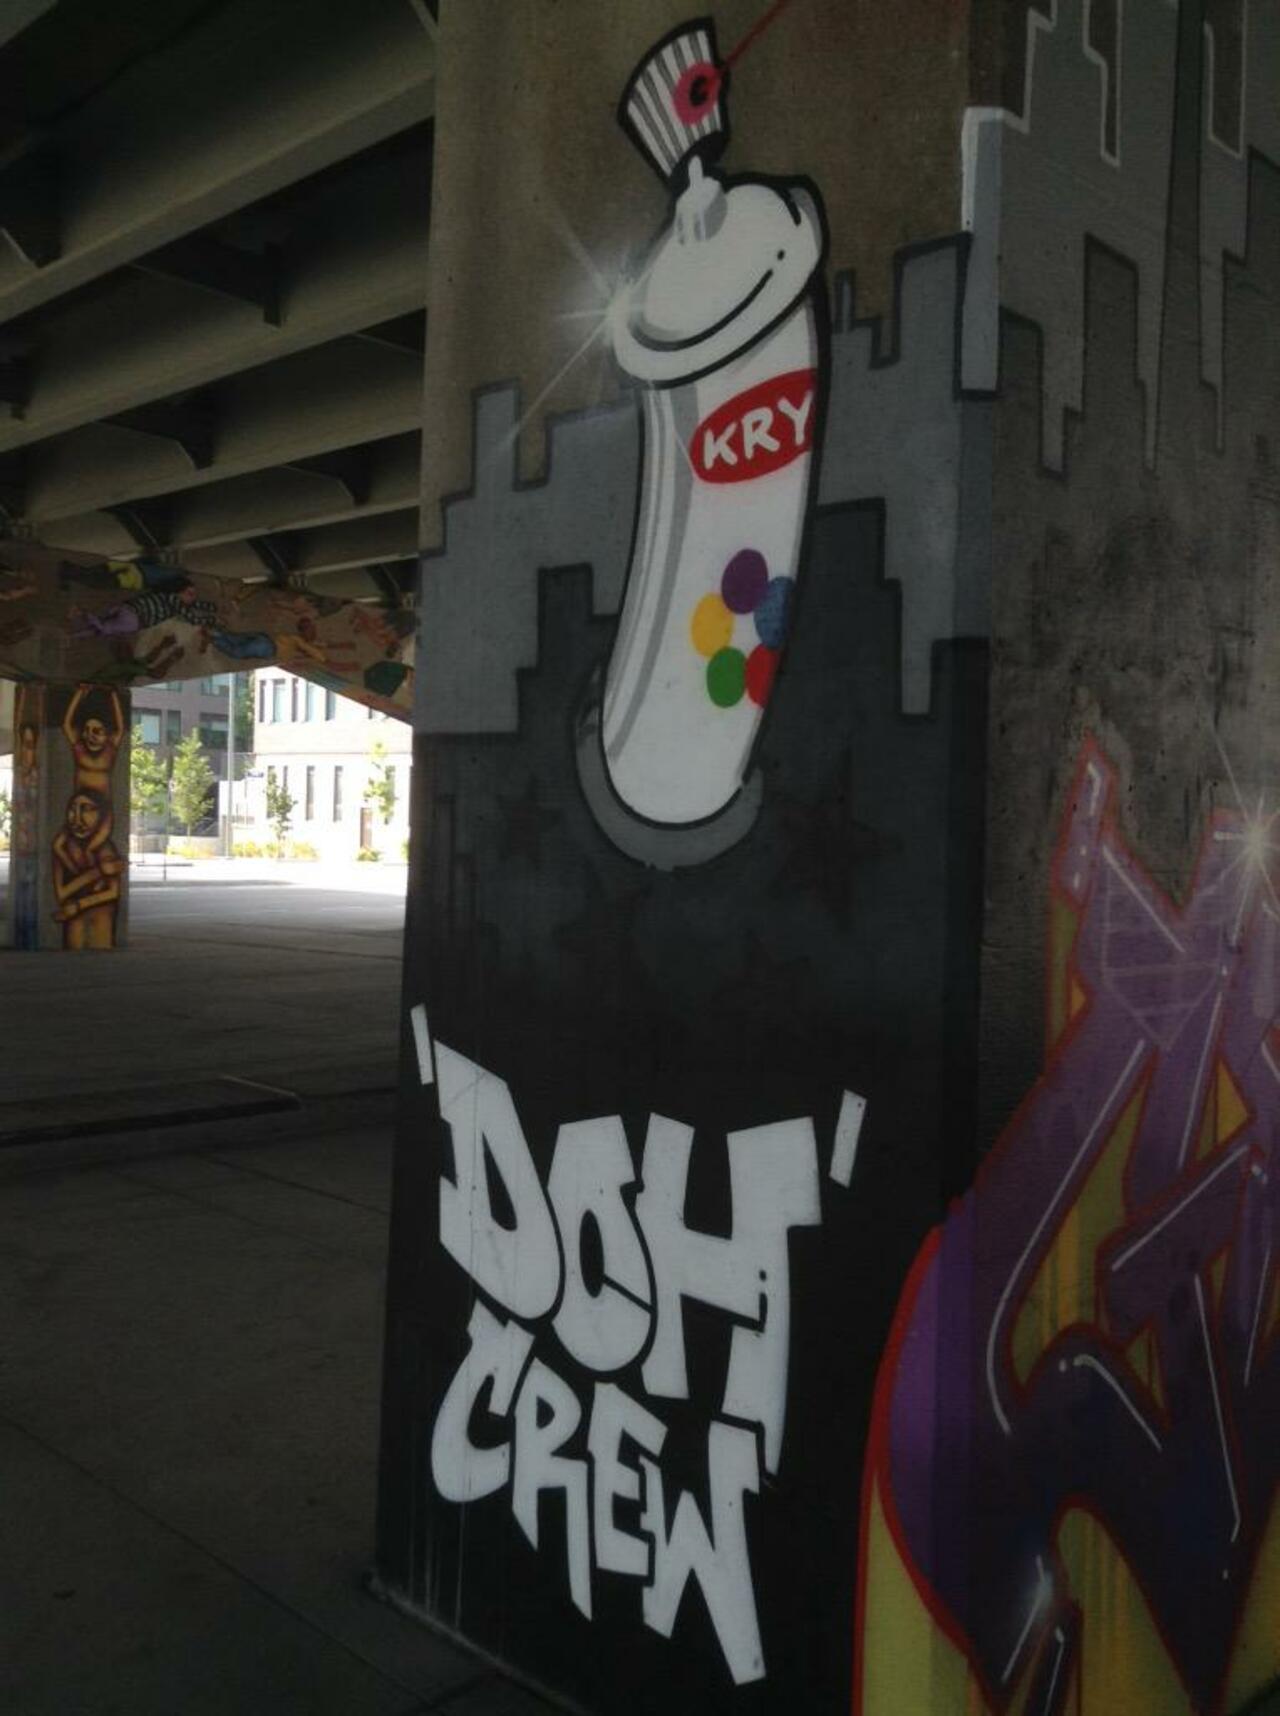 RT @KarenM0213: This unique space includes skateboarding & basketball #graffiti #streetart #UnderpassPark #Toronto #topoli http://t.co/oXx3UFkVg5